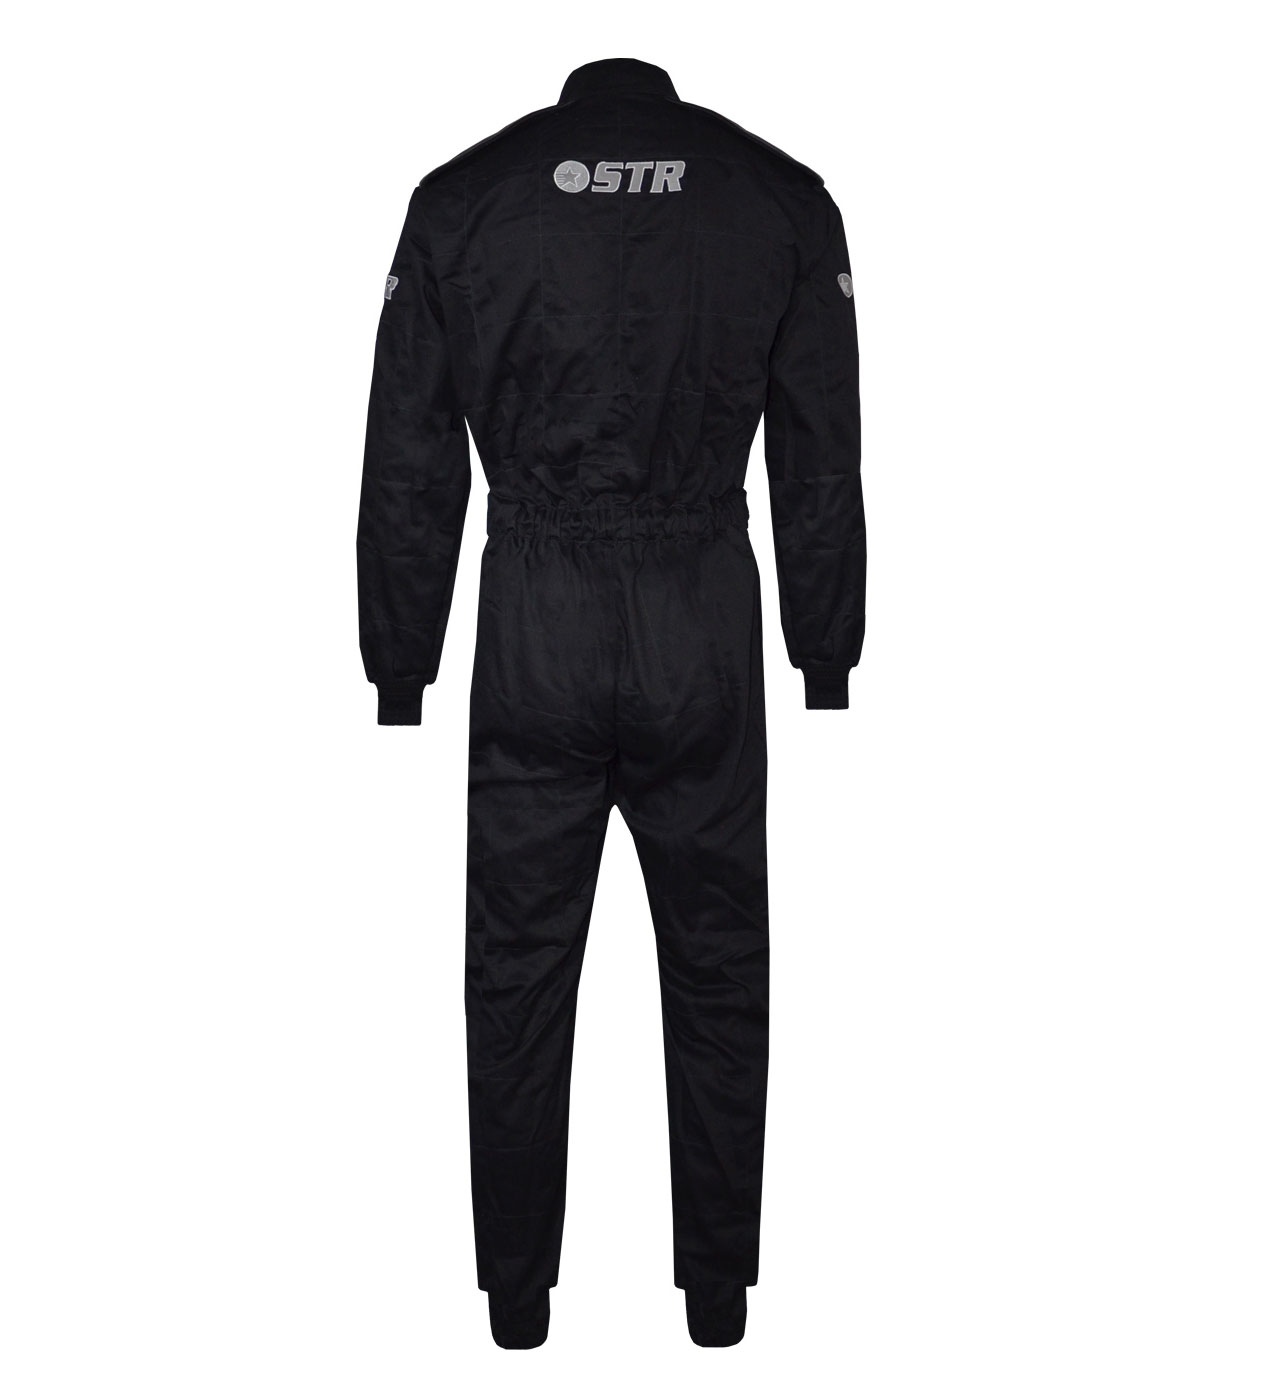 STR  Youth 'Graphite Start' Race Suit - Black/Grey